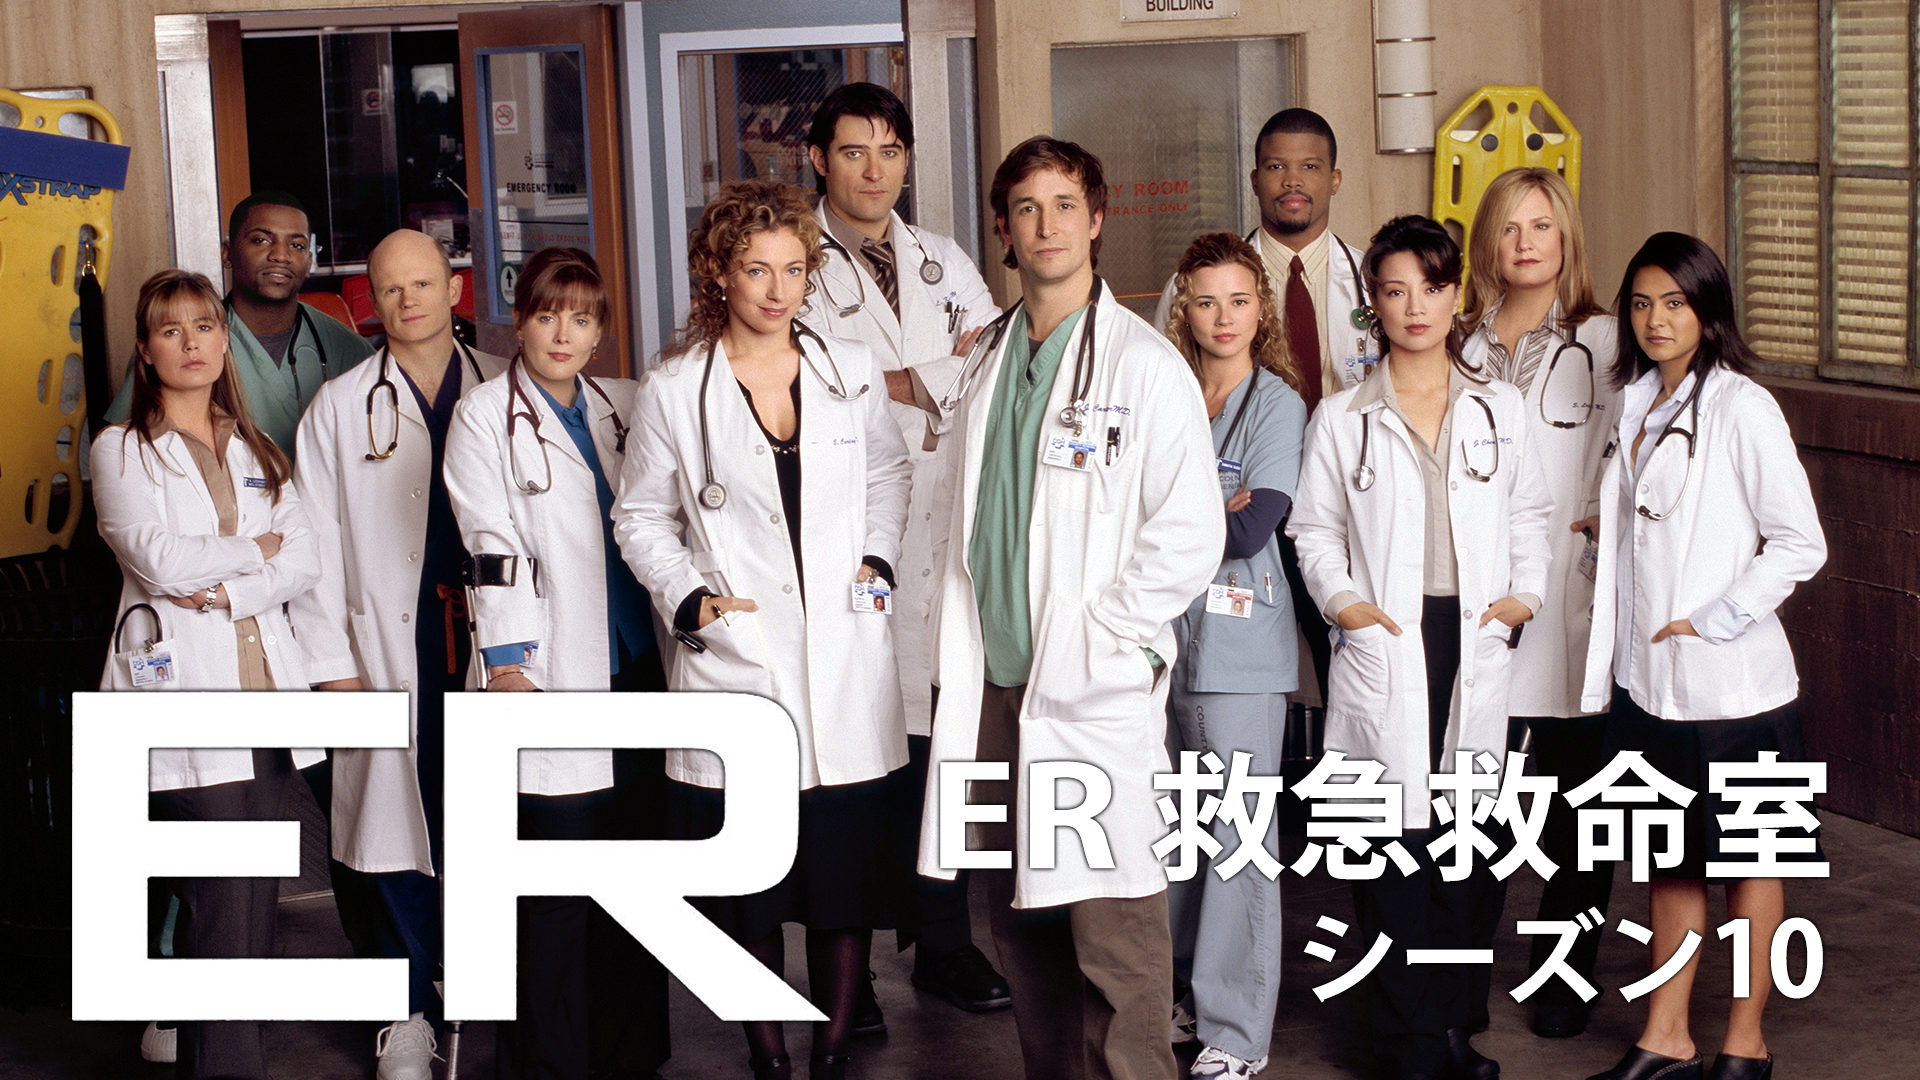 ER 緊急救命室 シーズン10(海外ドラマ / 2003)の動画視聴 | U-NEXT 31